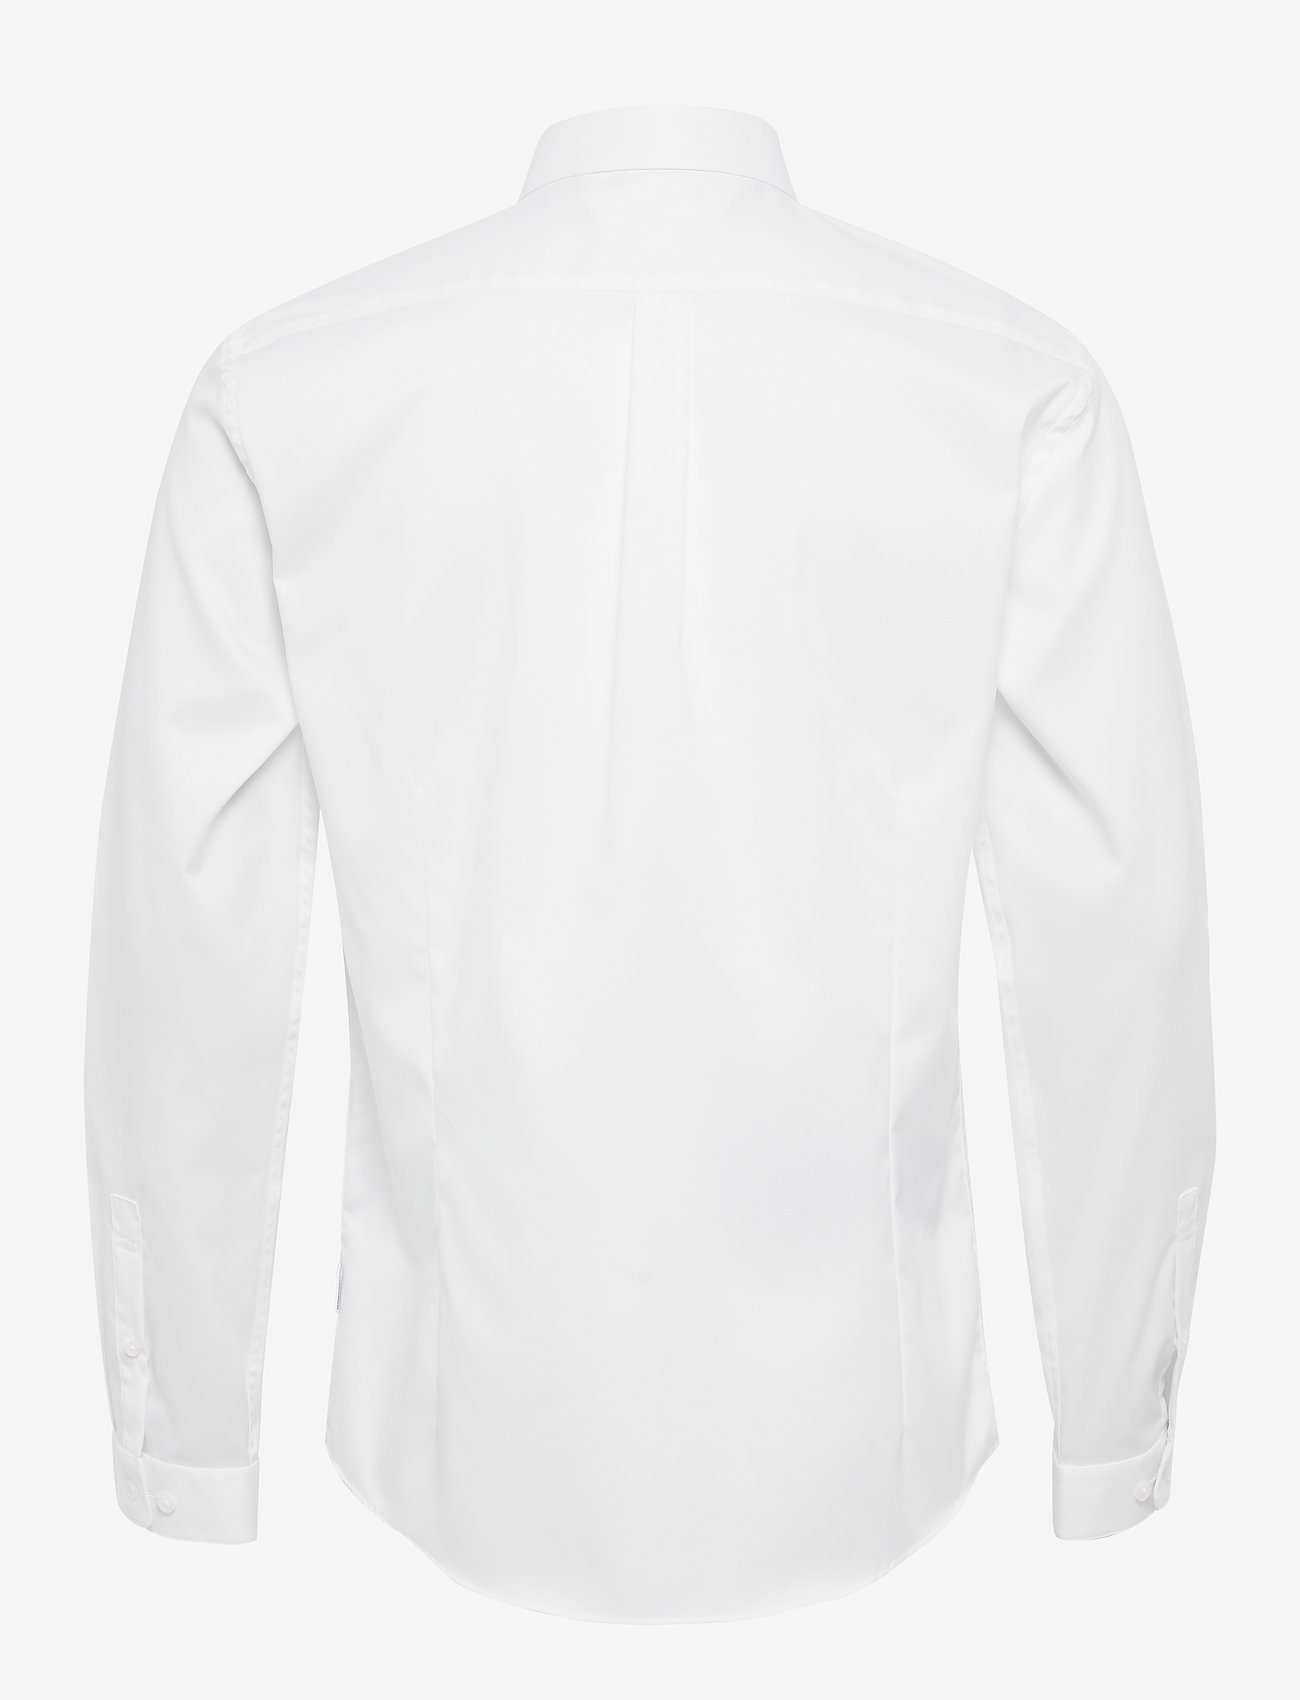 Lindbergh - Plain twill stretch shirt L/S - basic shirts - white - 1